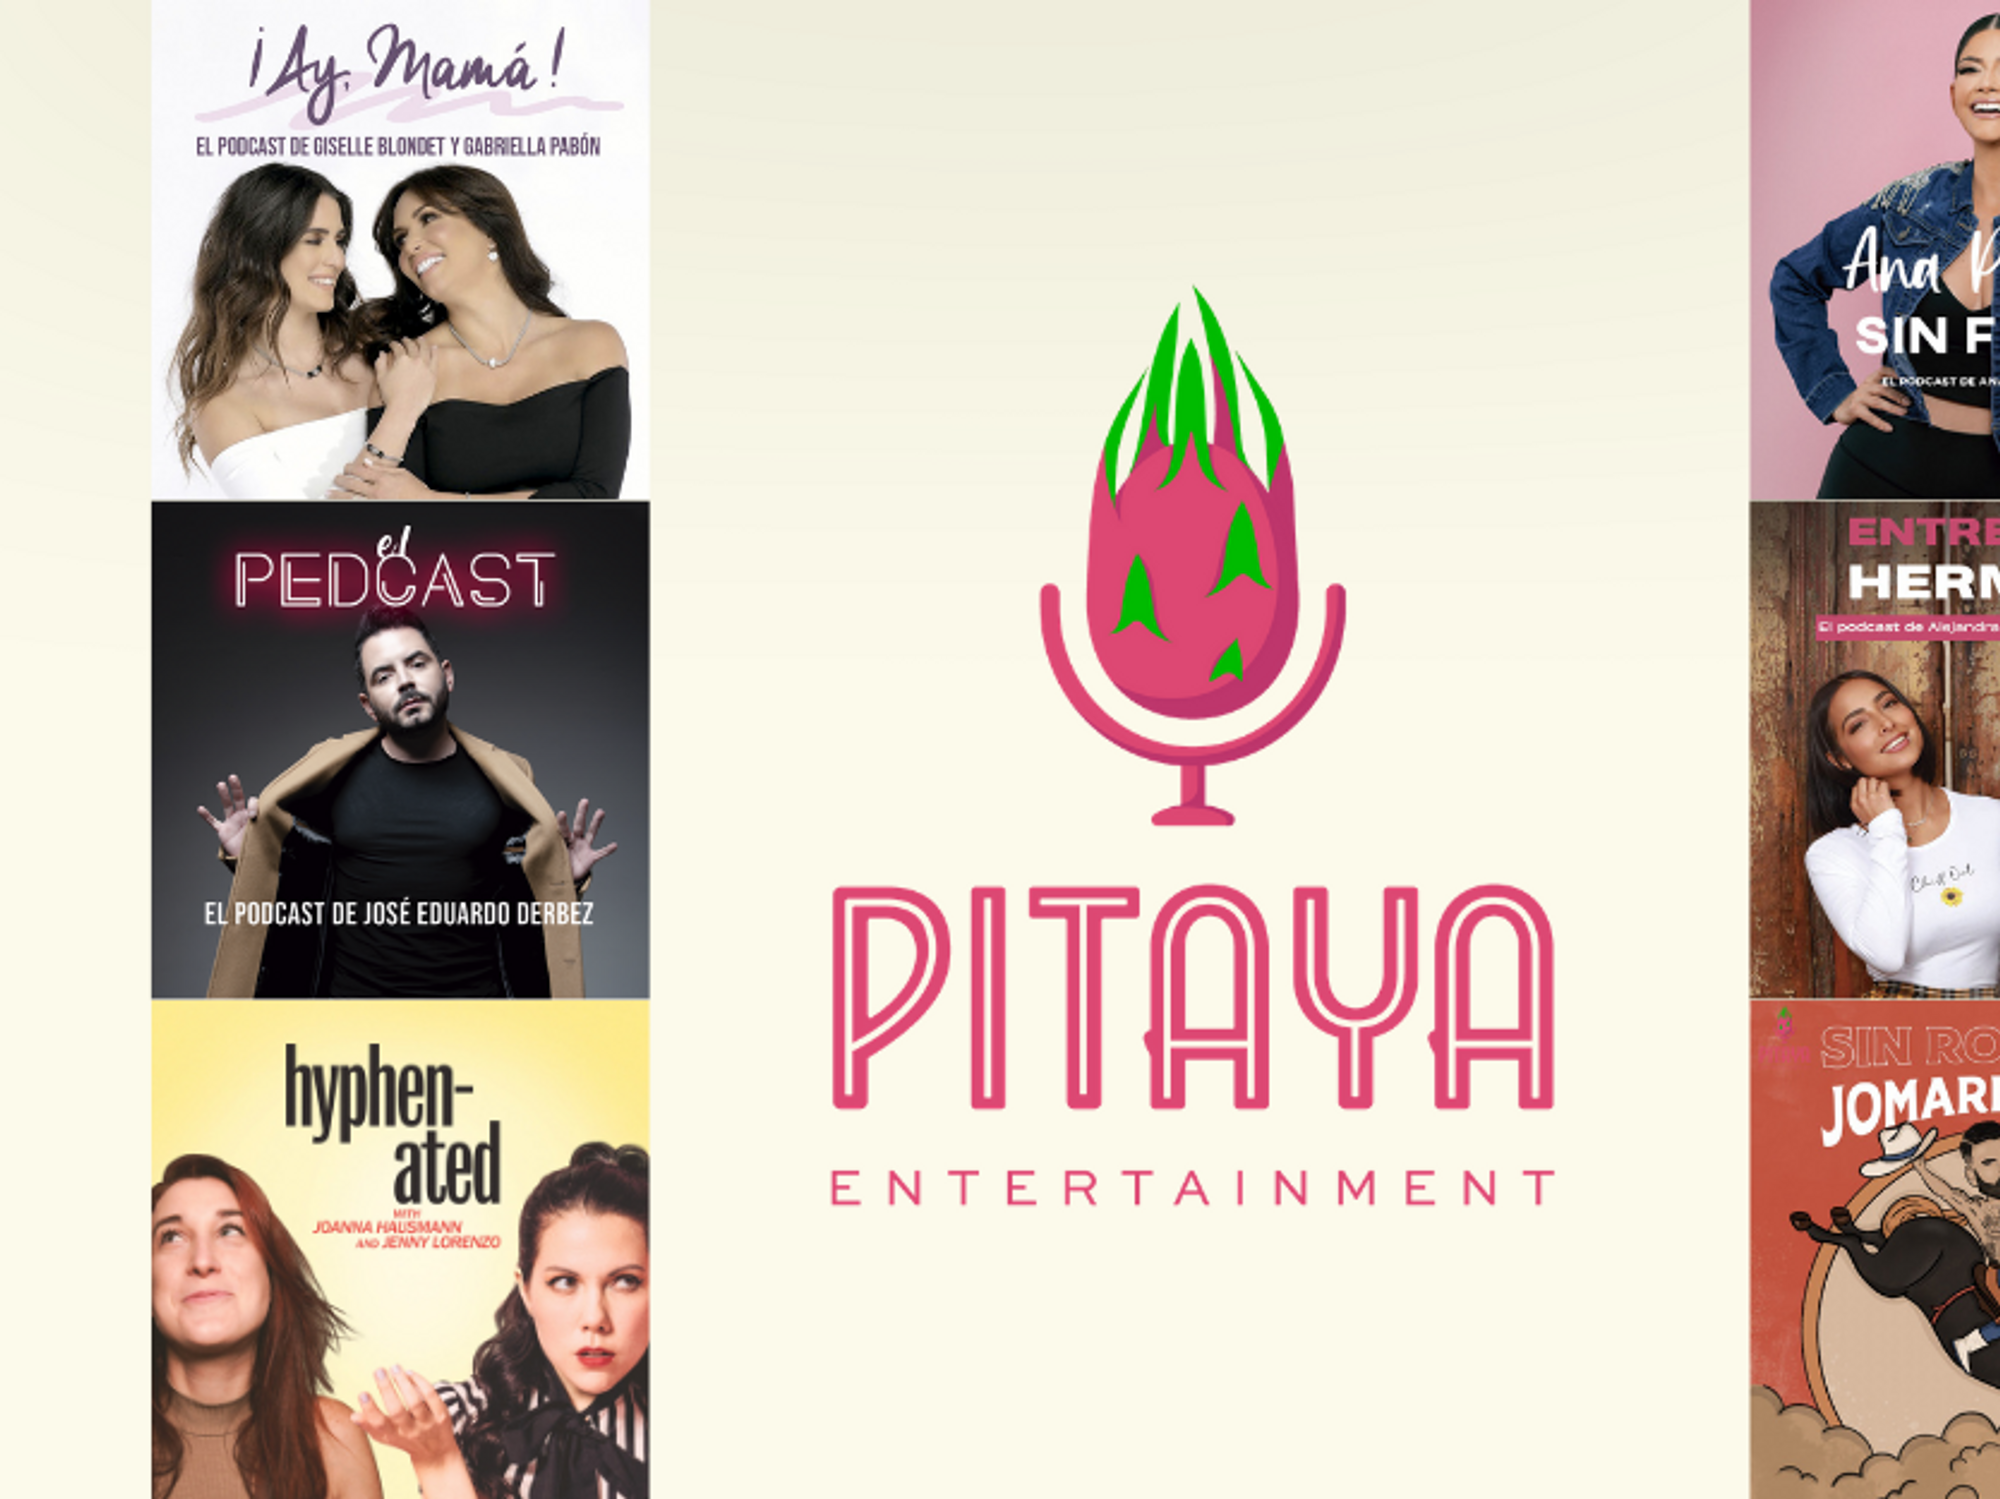 LA-Based Pitaya Entertainment Debuts Podcast Network Tailored to US Latinos